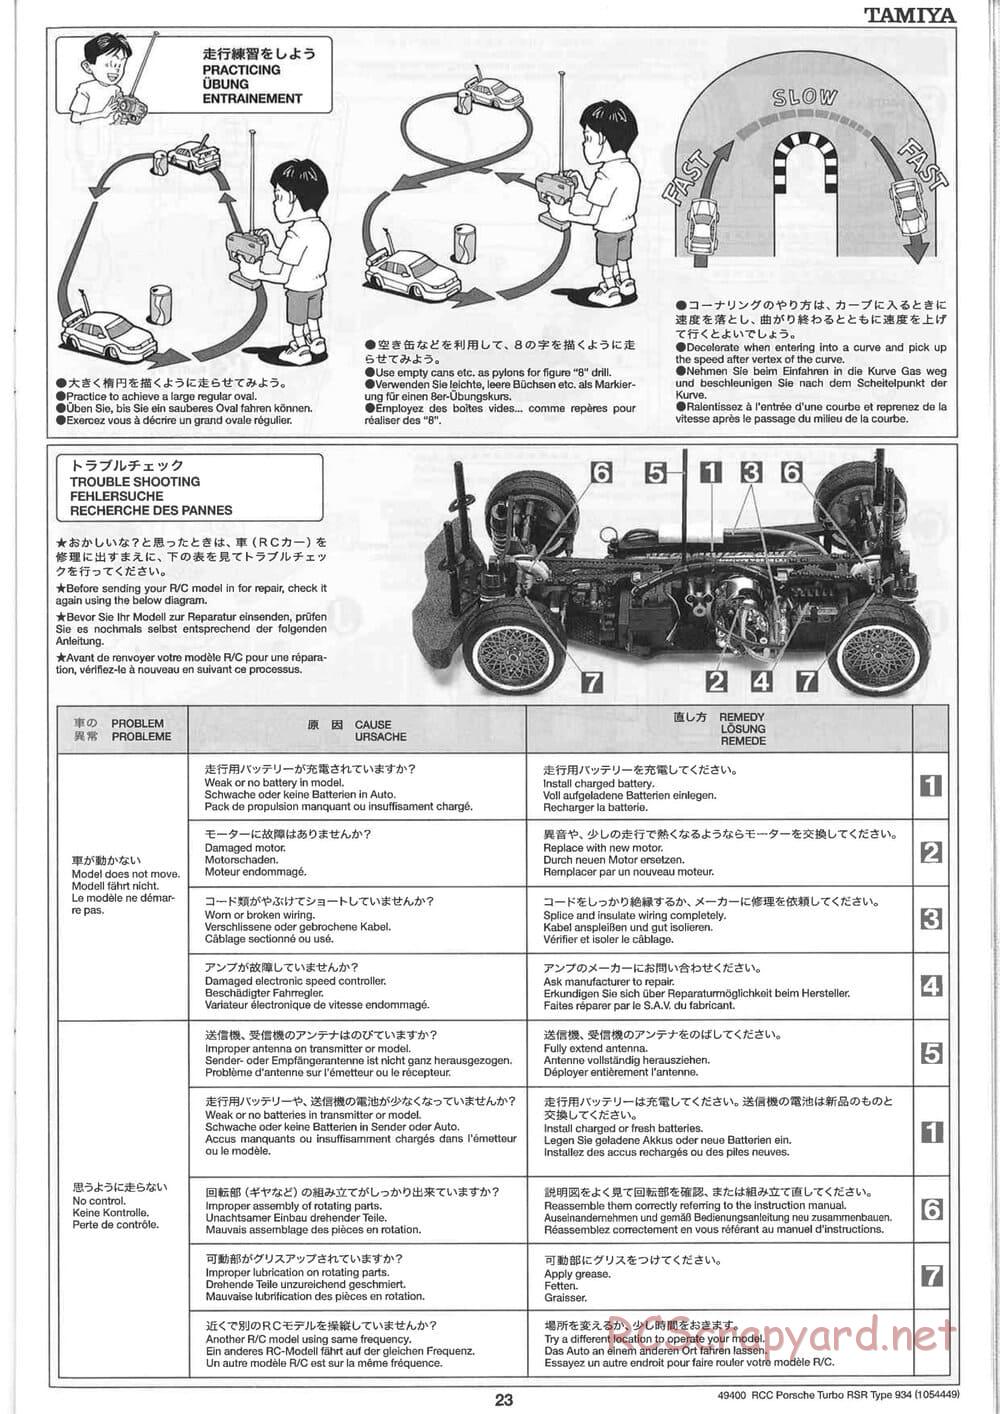 Tamiya - Porsche Turbo RSR Type 934 - TA05 Chassis - Manual - Page 23